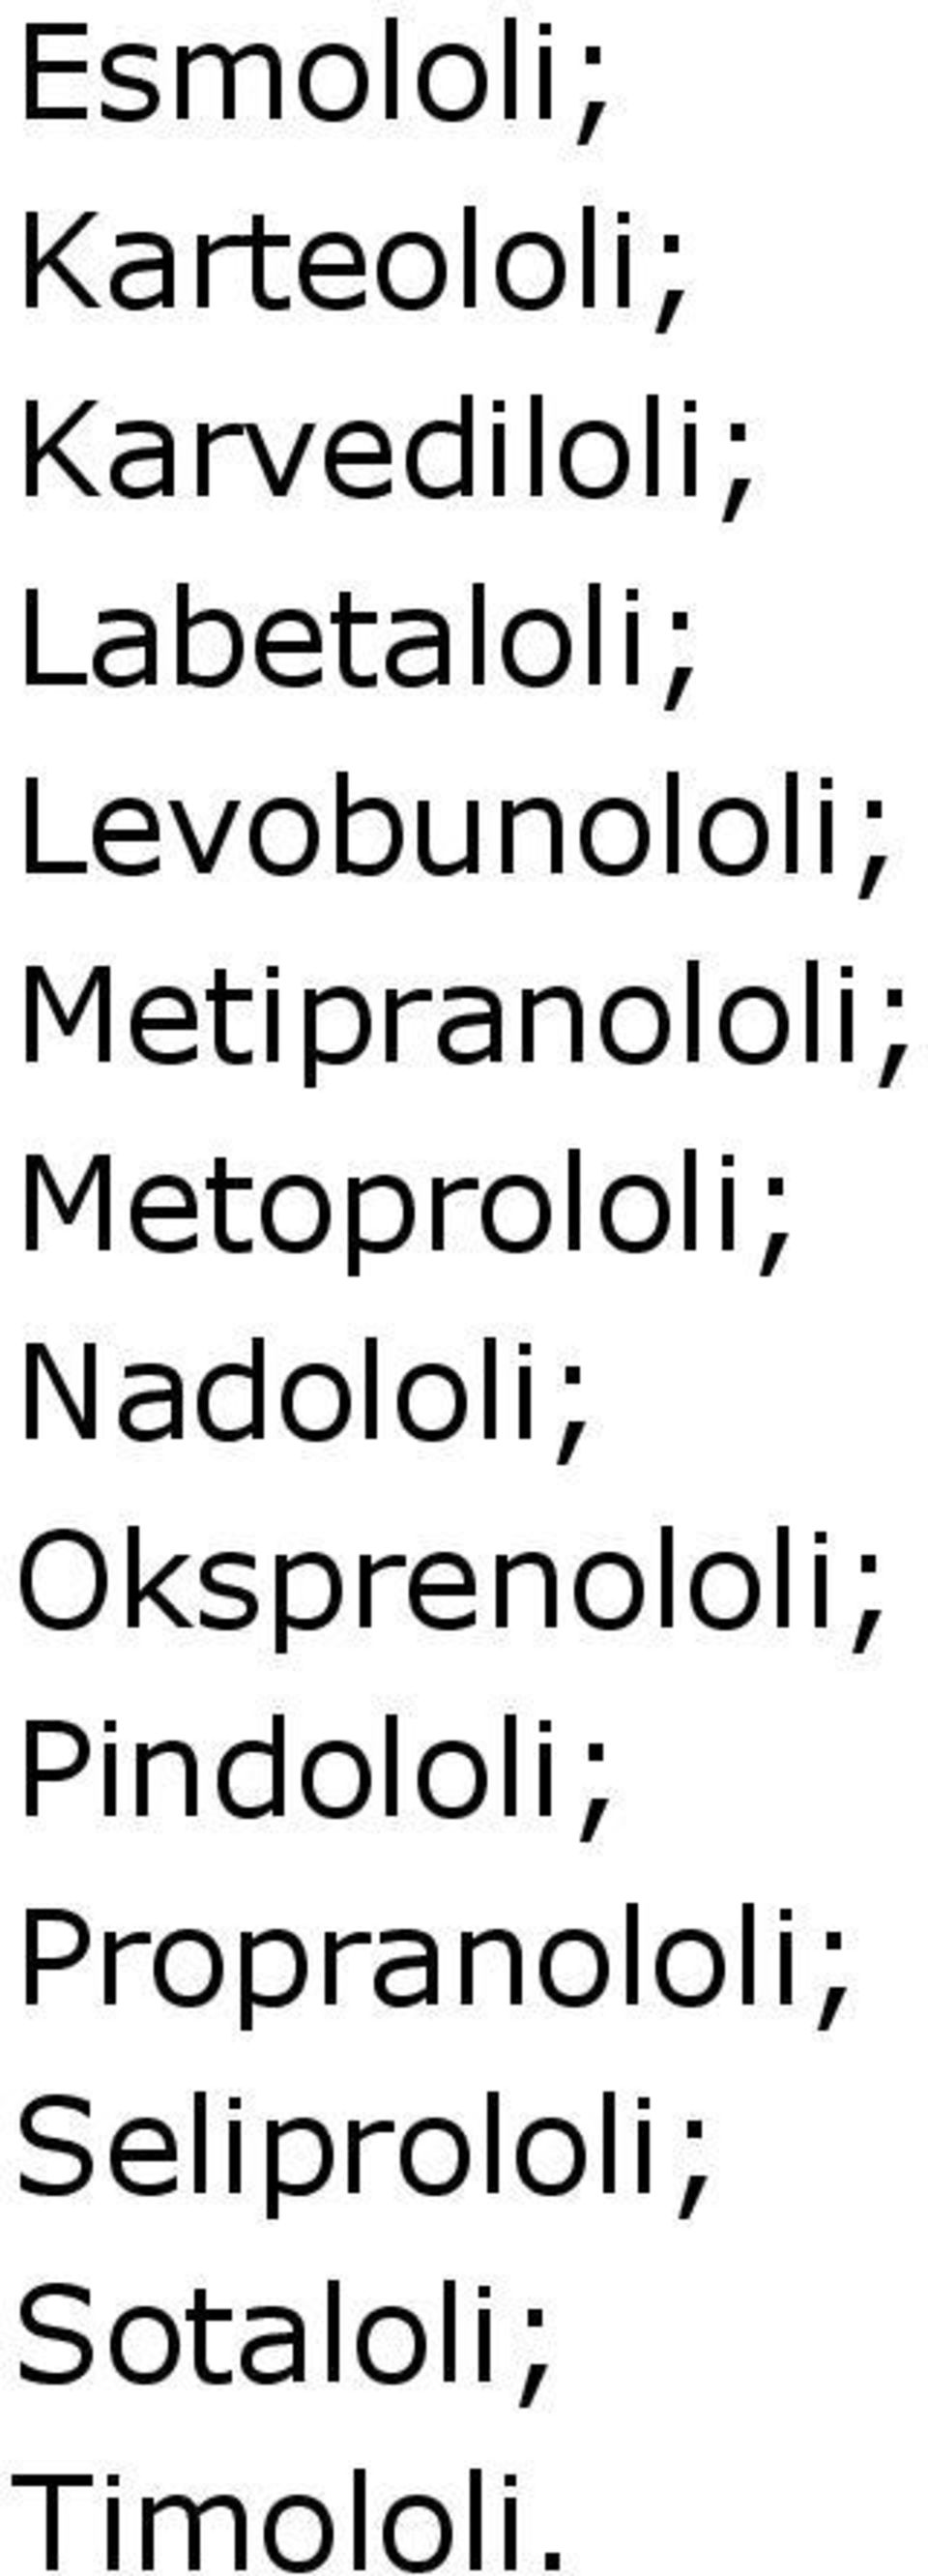 Metoprololi; Nadololi; Oksprenololi;